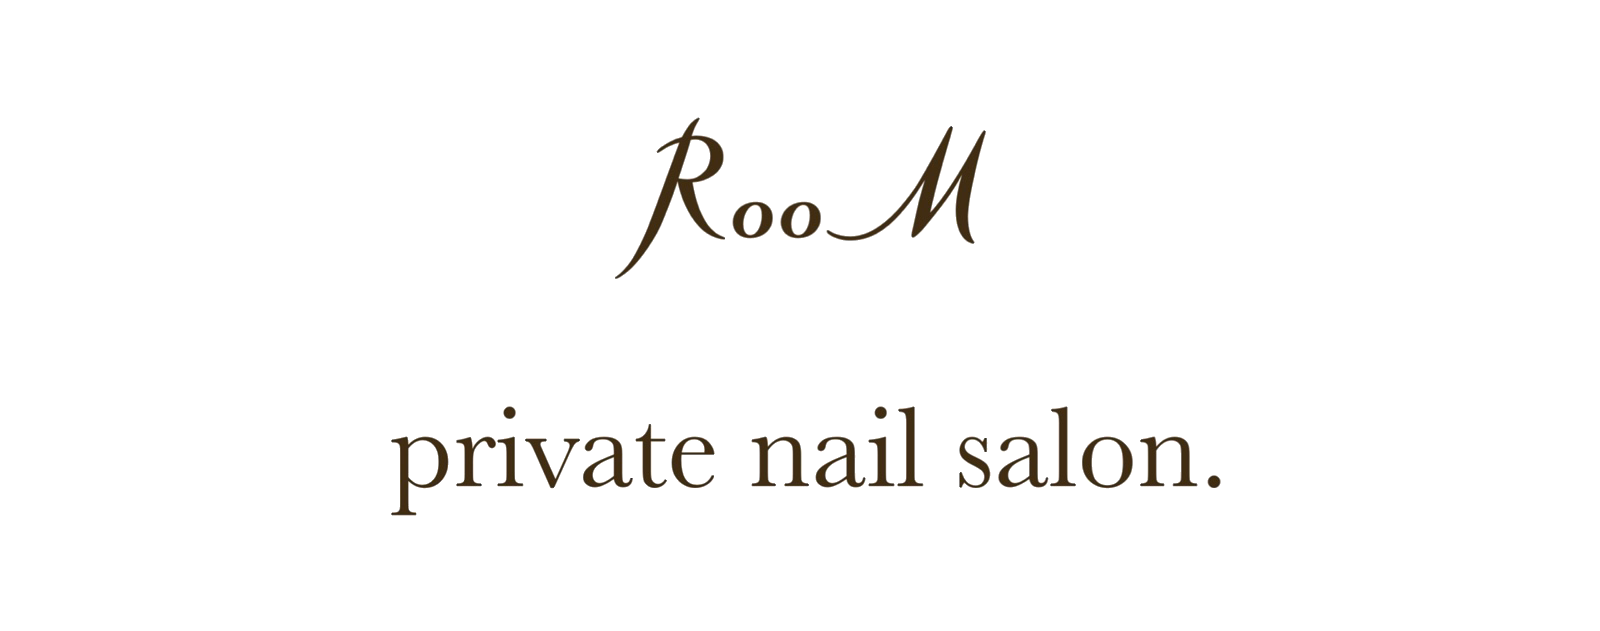 private nail salon   RooM  -ネイルチップ-